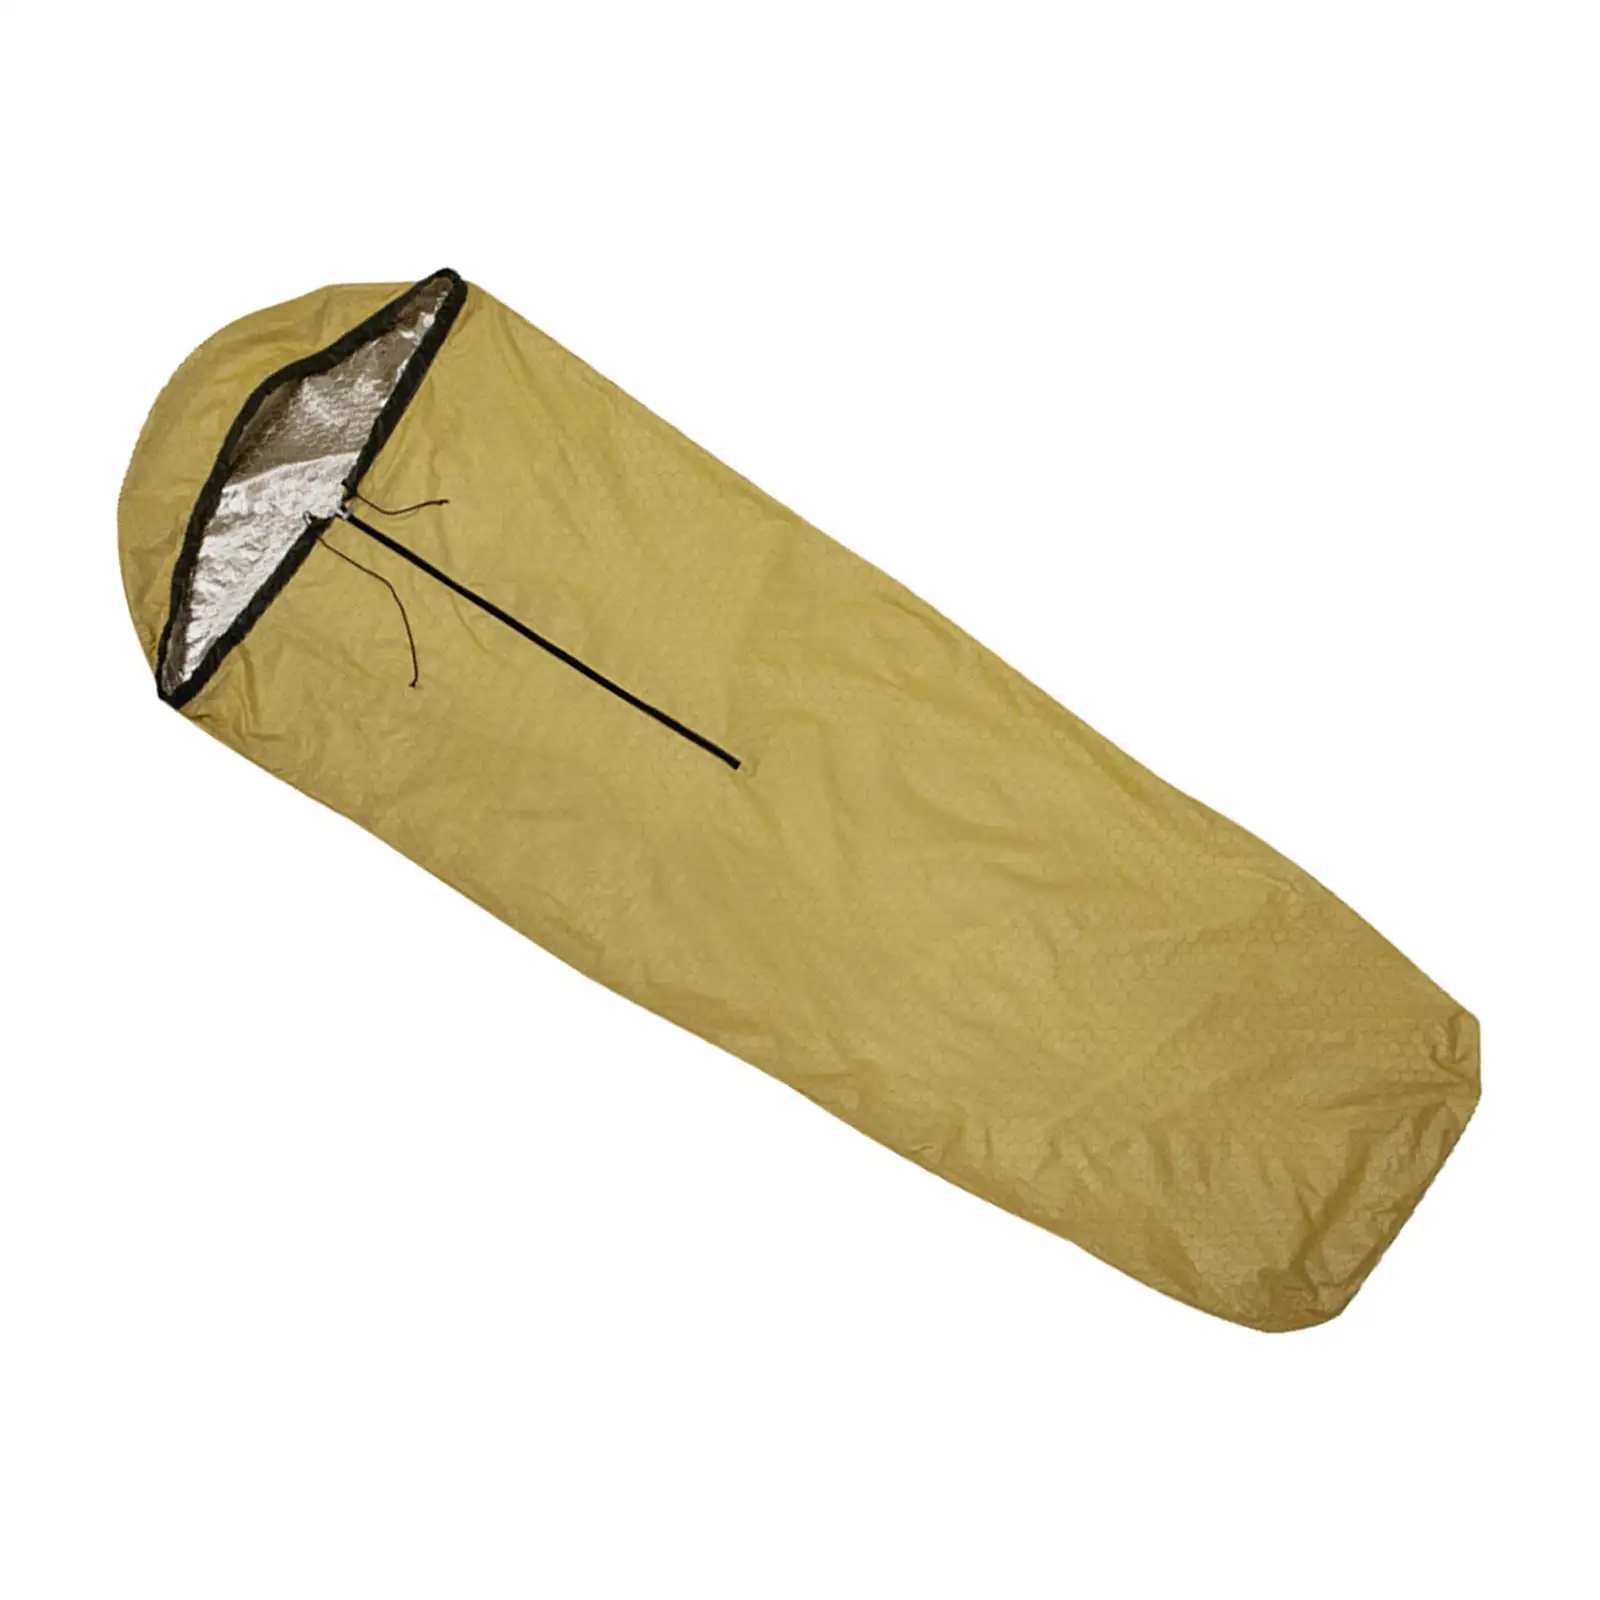 Emergency Sleeping Bag Thermal Liner for Outdoor Survival Activities Travel